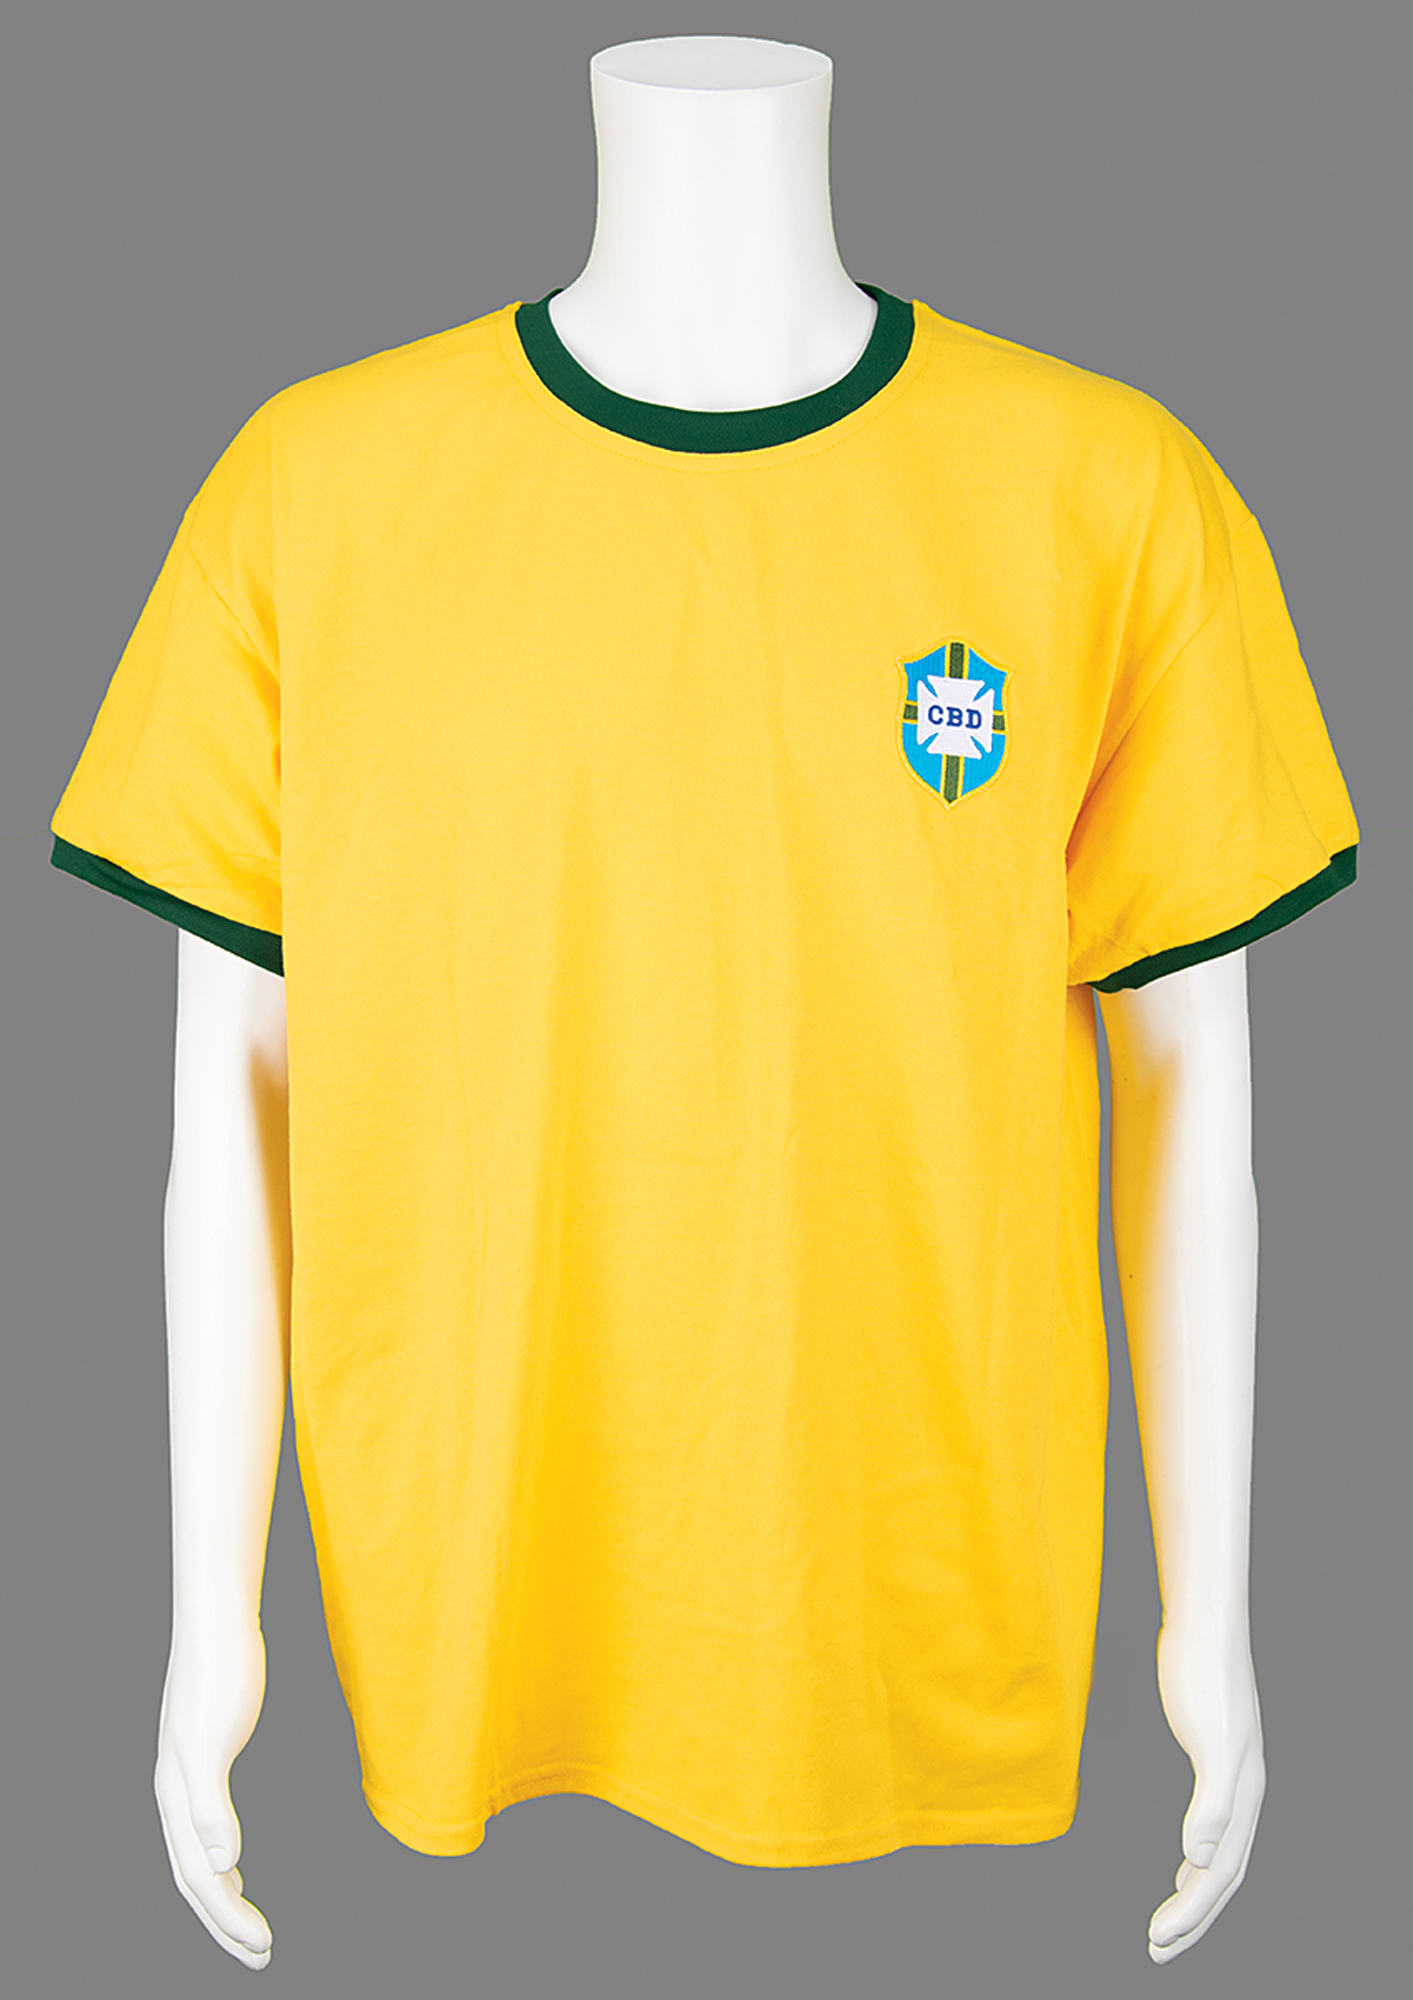 Pele Signed Soccer Jersey | RR Auction